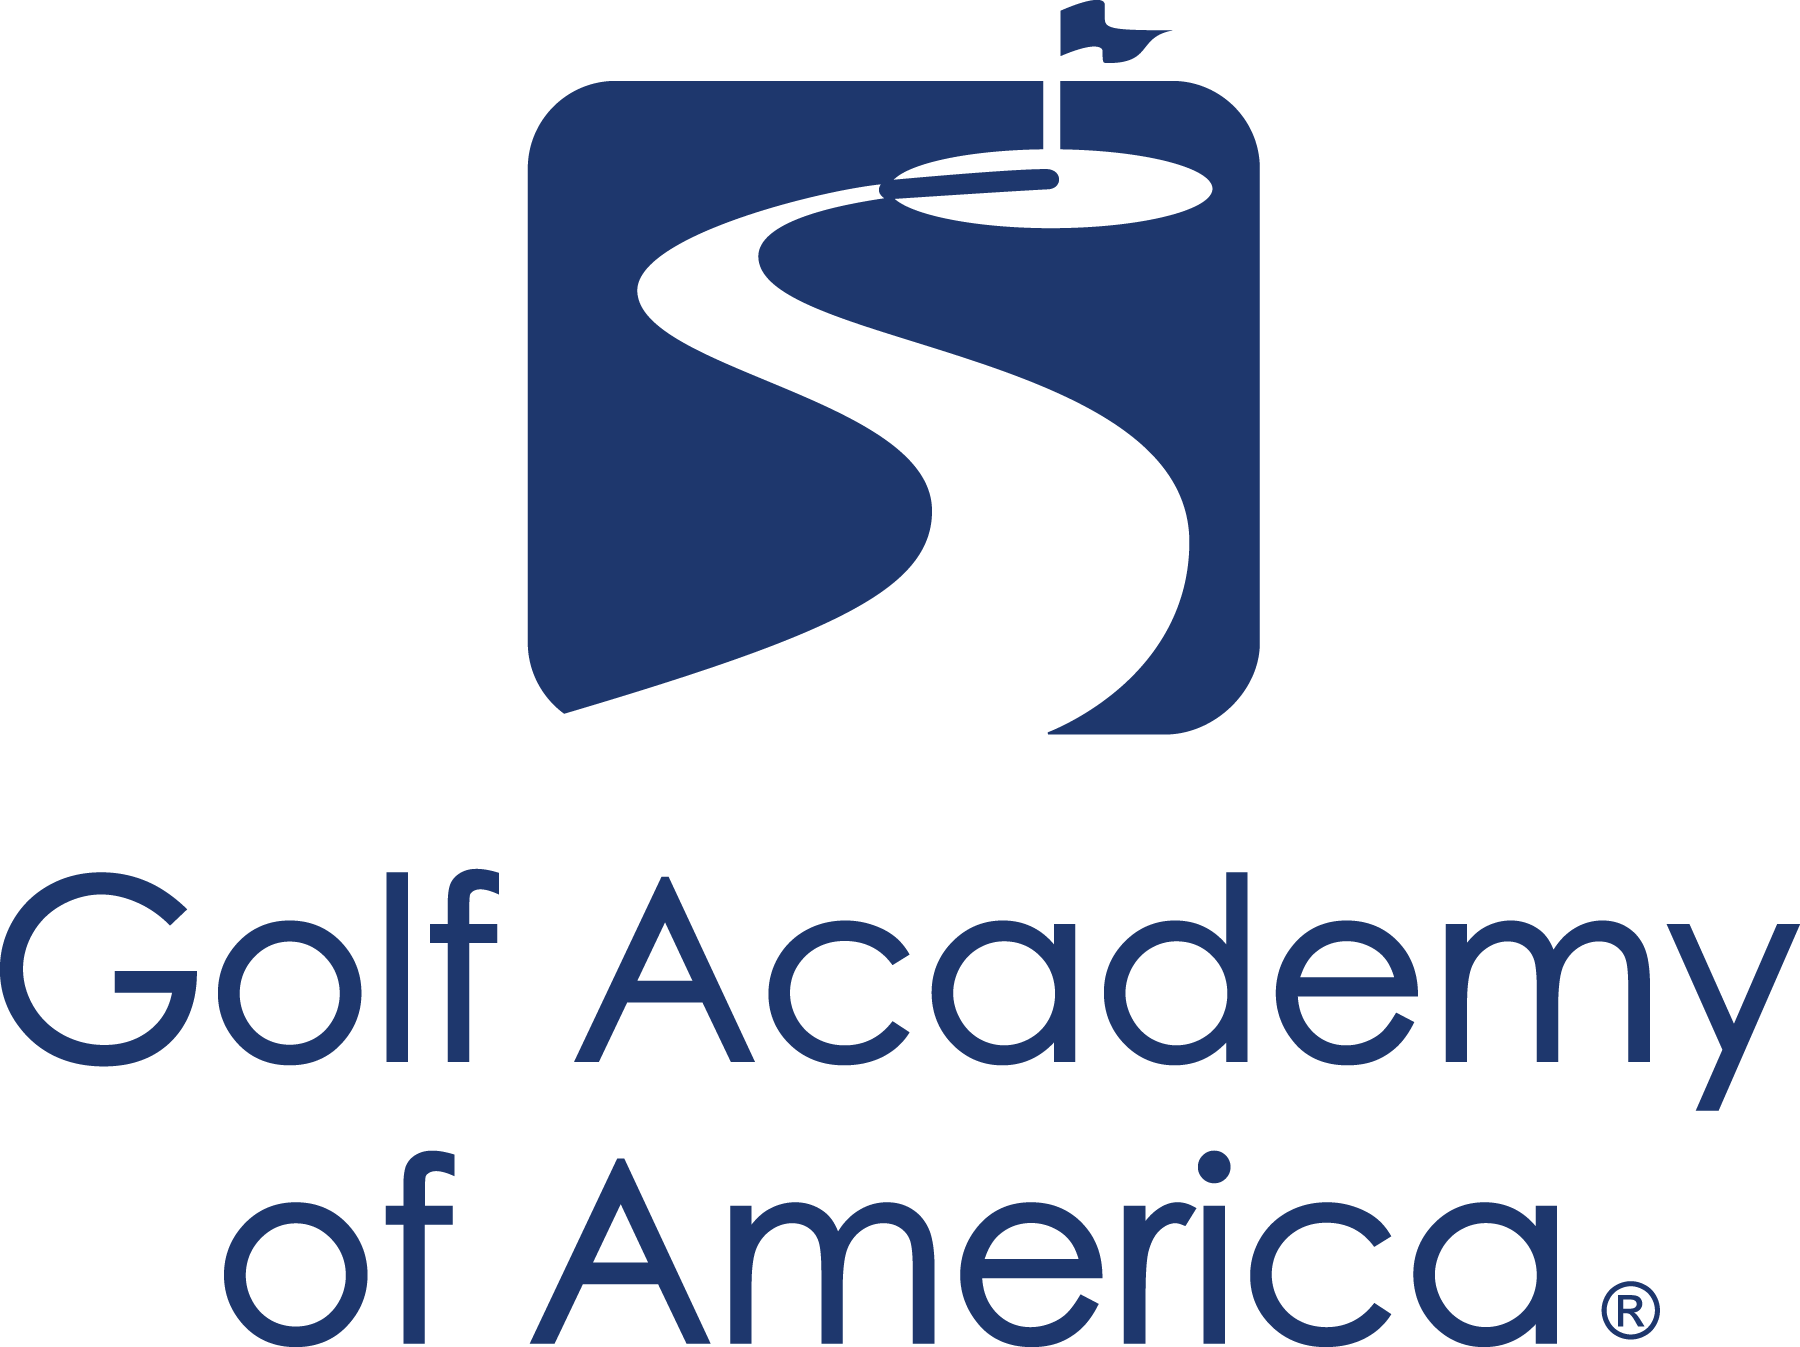 Golf Academy Of America (1800x1347)